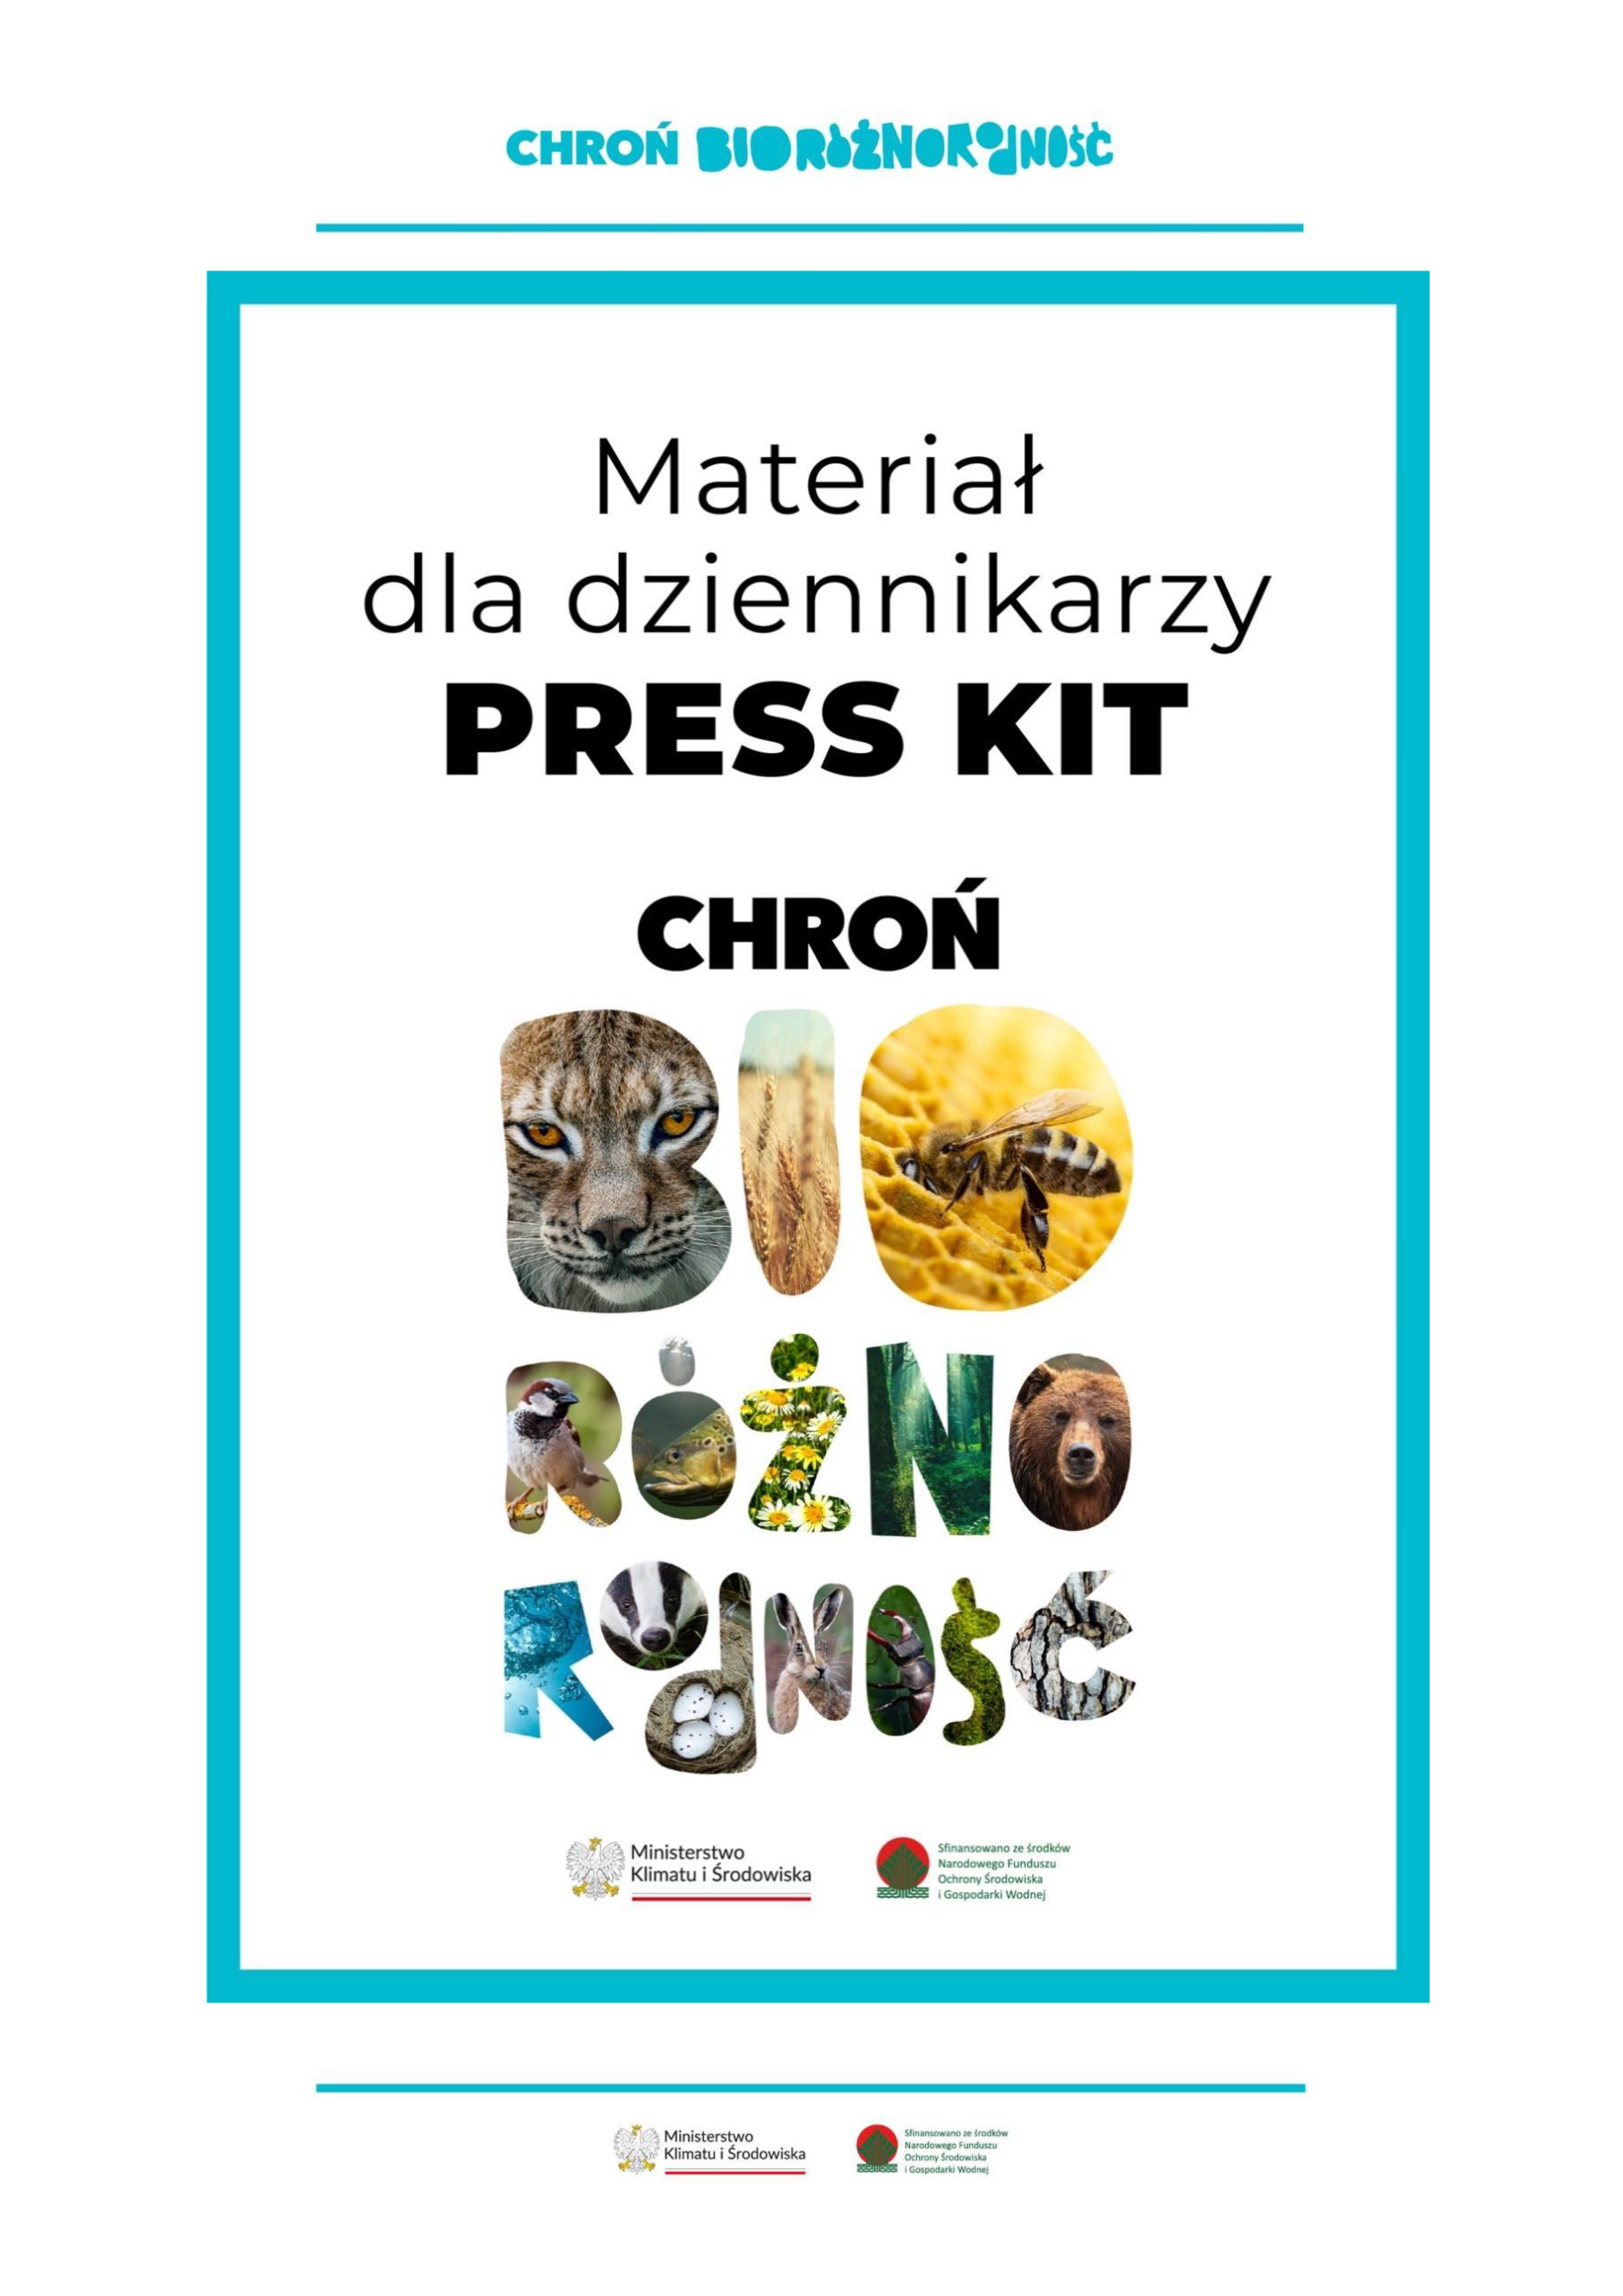 Press kit kampanii Chroń Bioróżnorodność